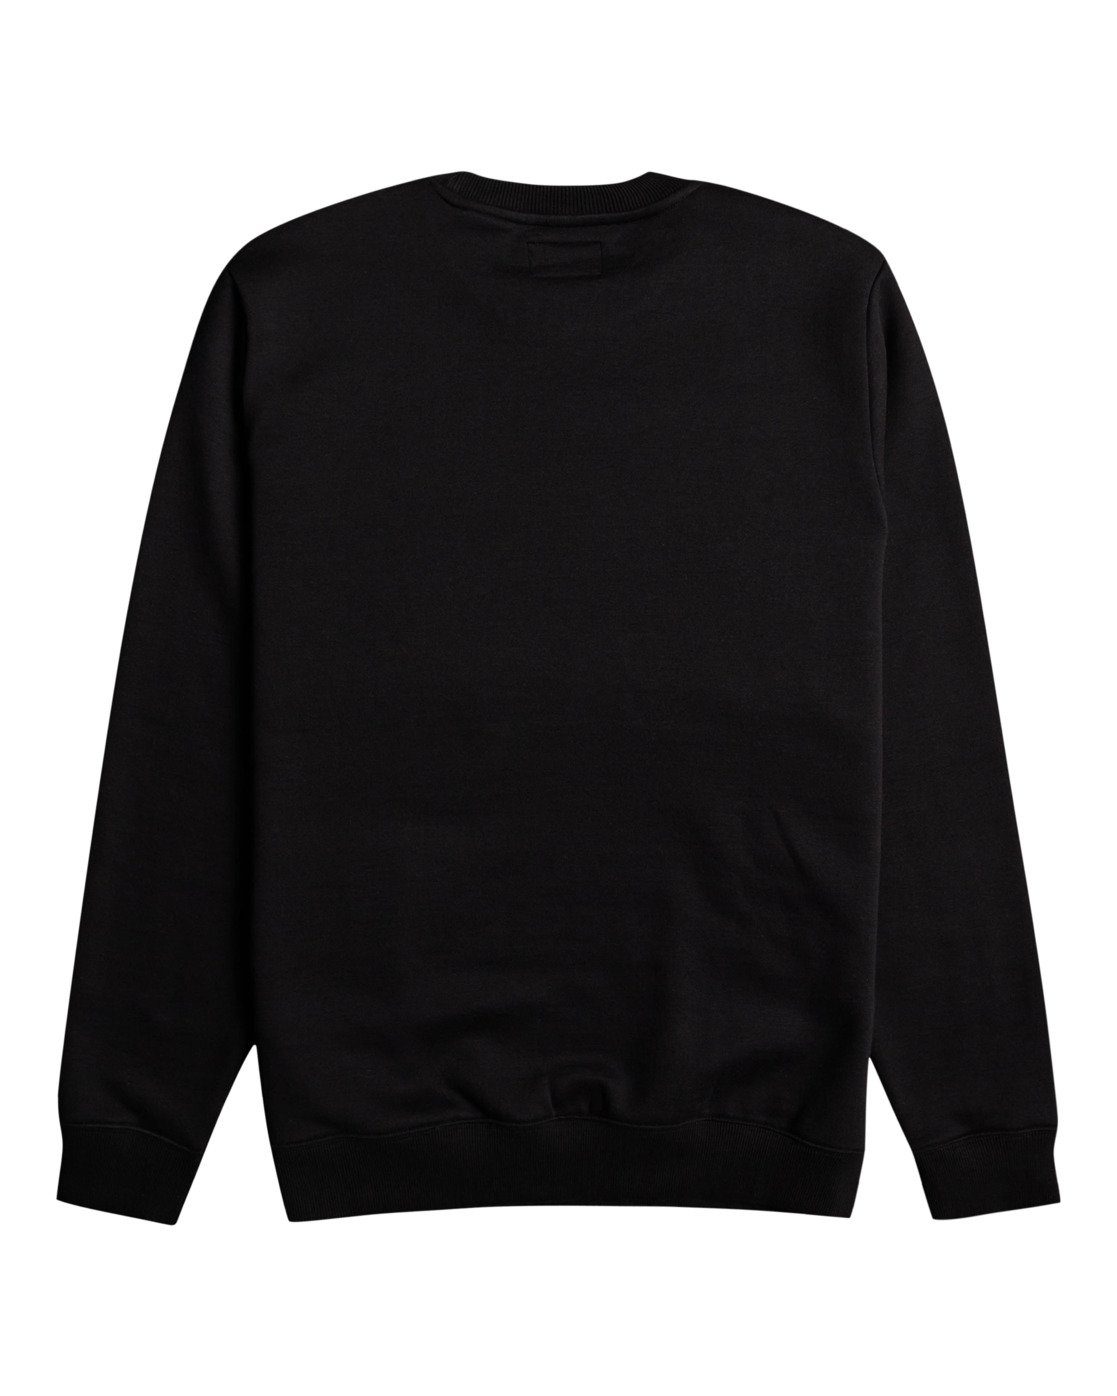 Arch Black Billabong Sweatshirt